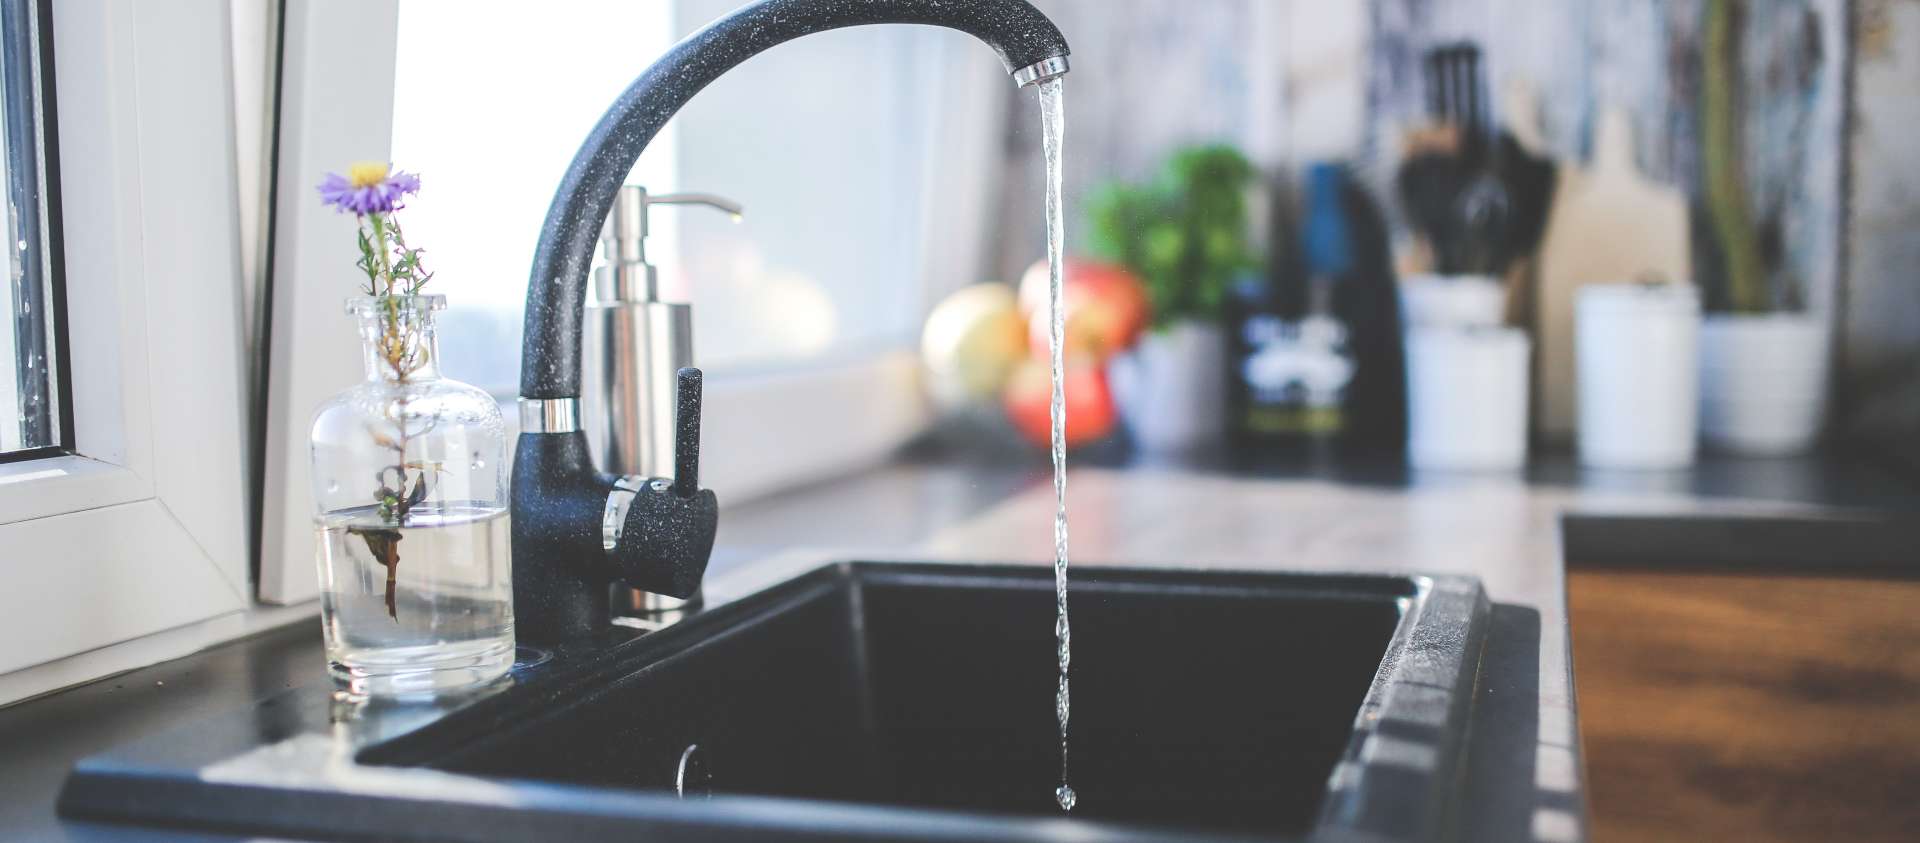 Kitchen sink tap with running water 